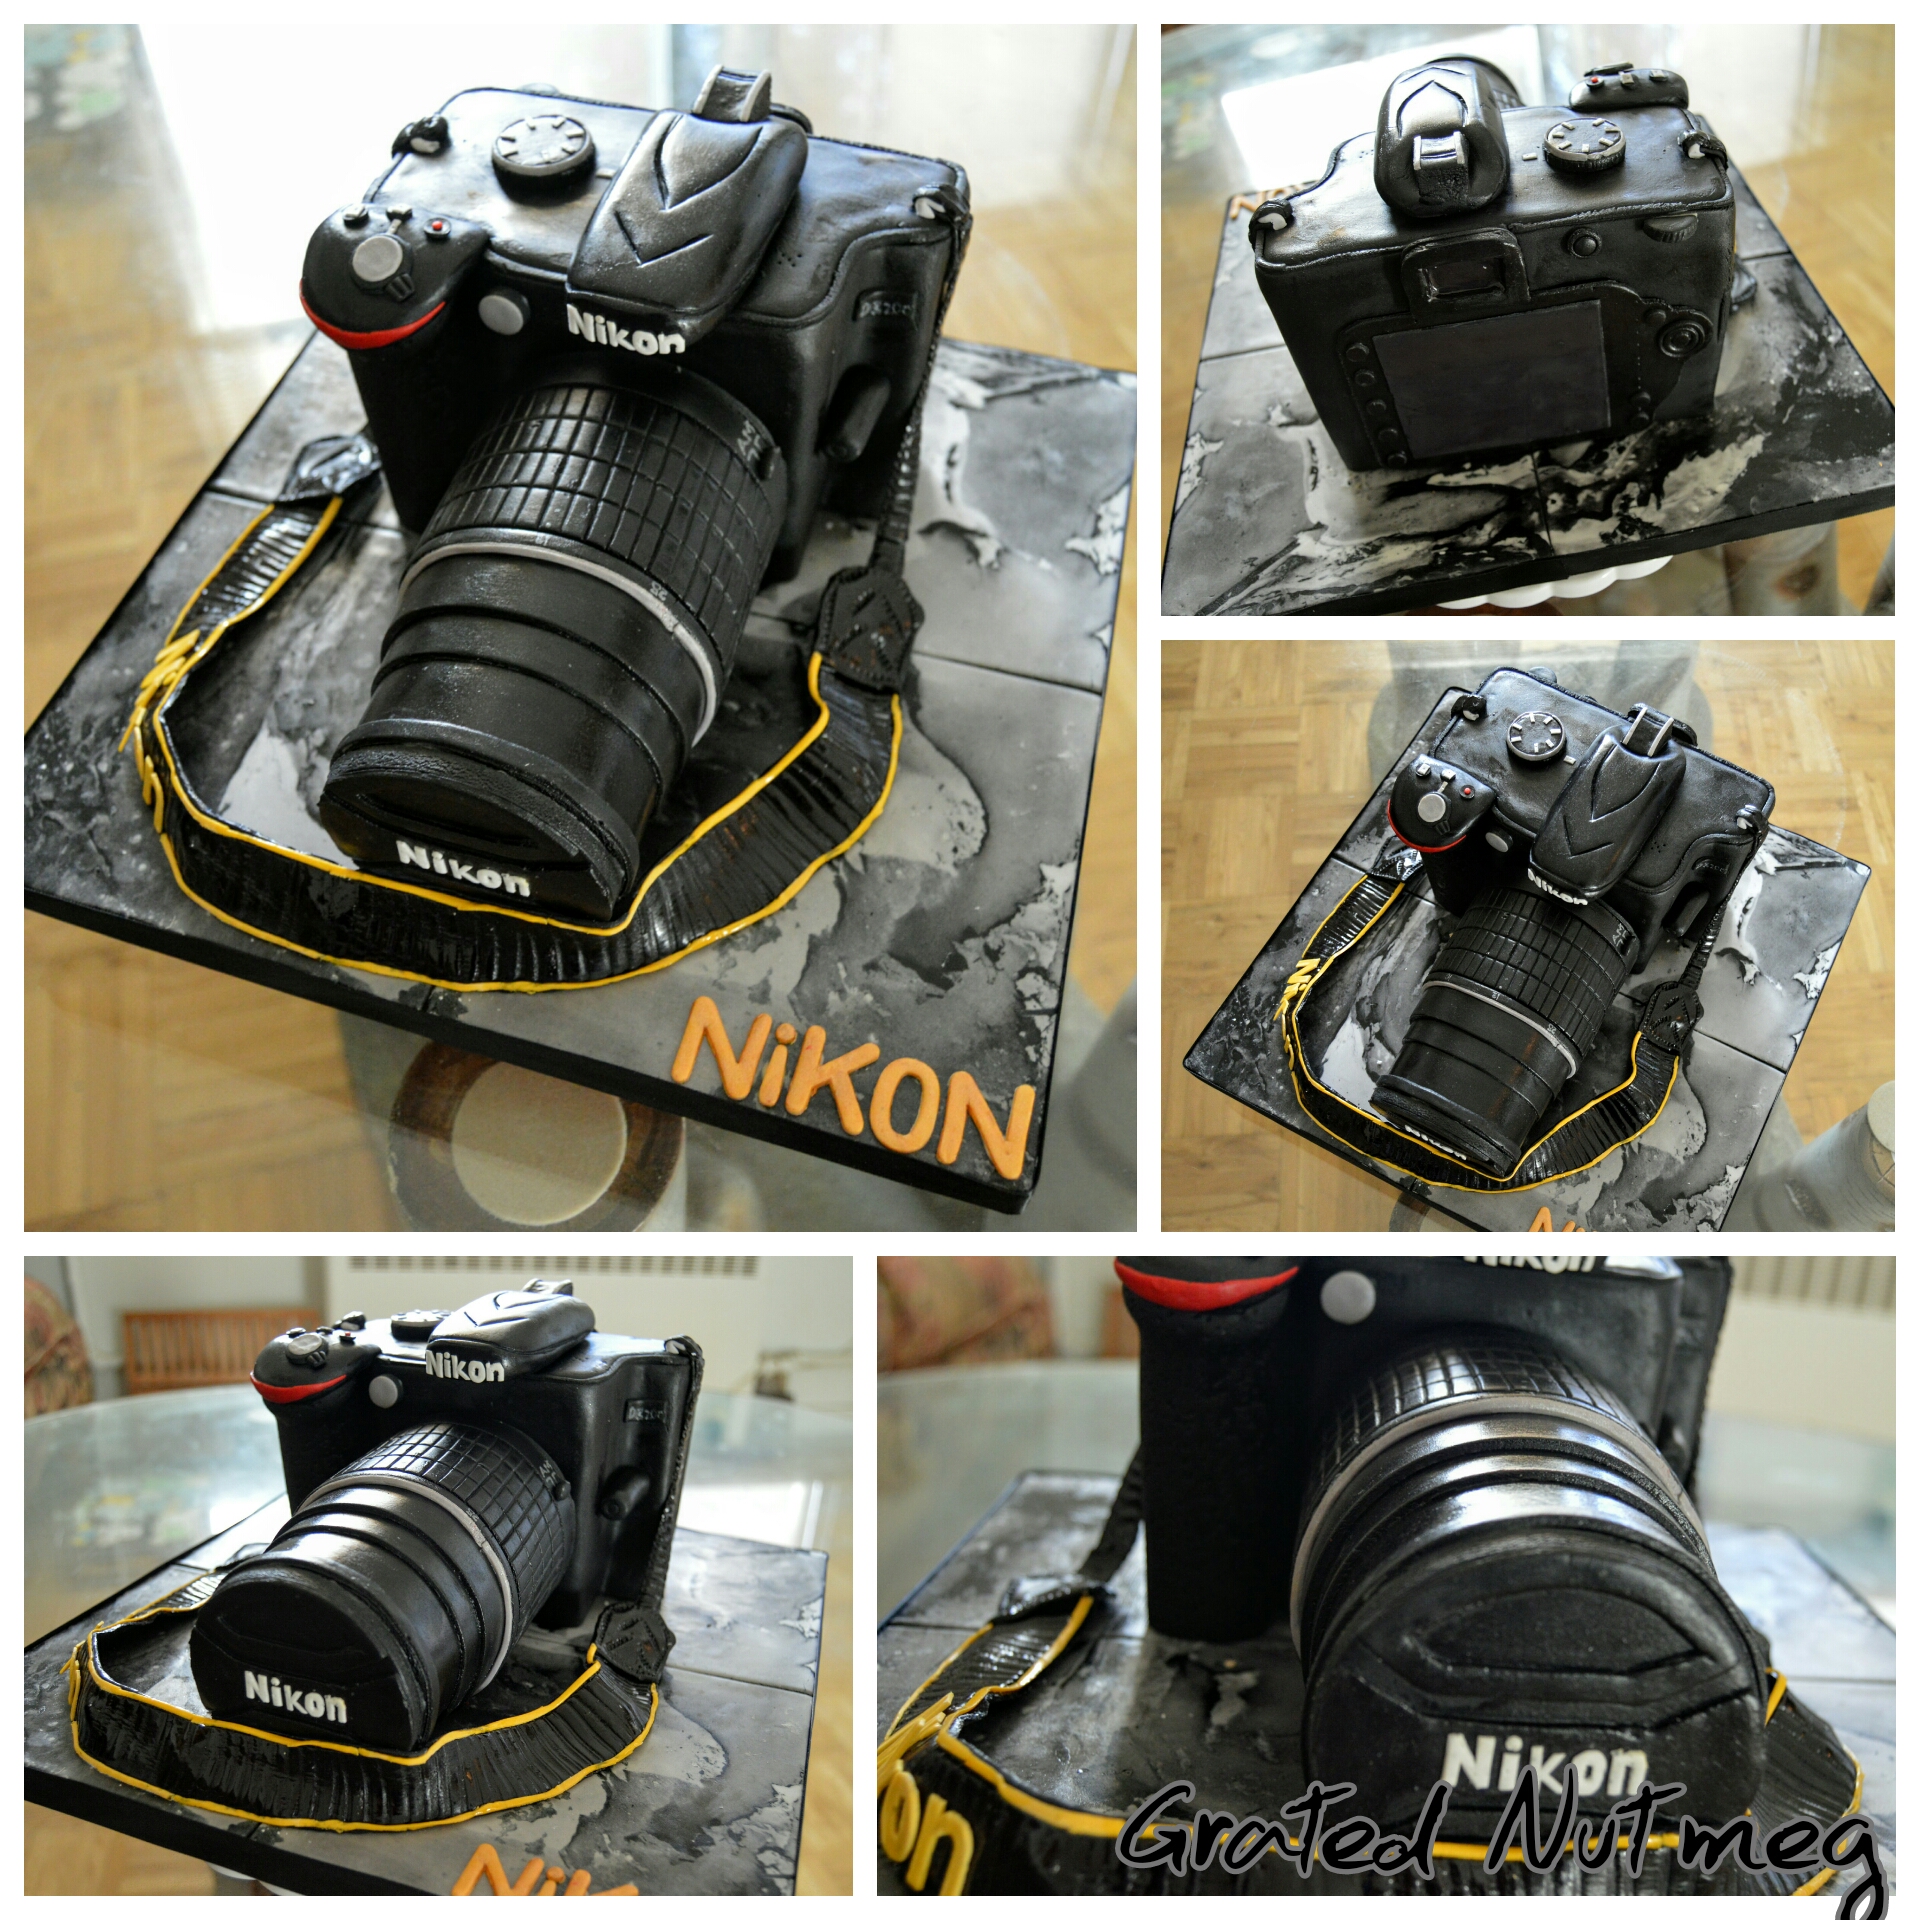 The Making of a Nikon Camera Cake